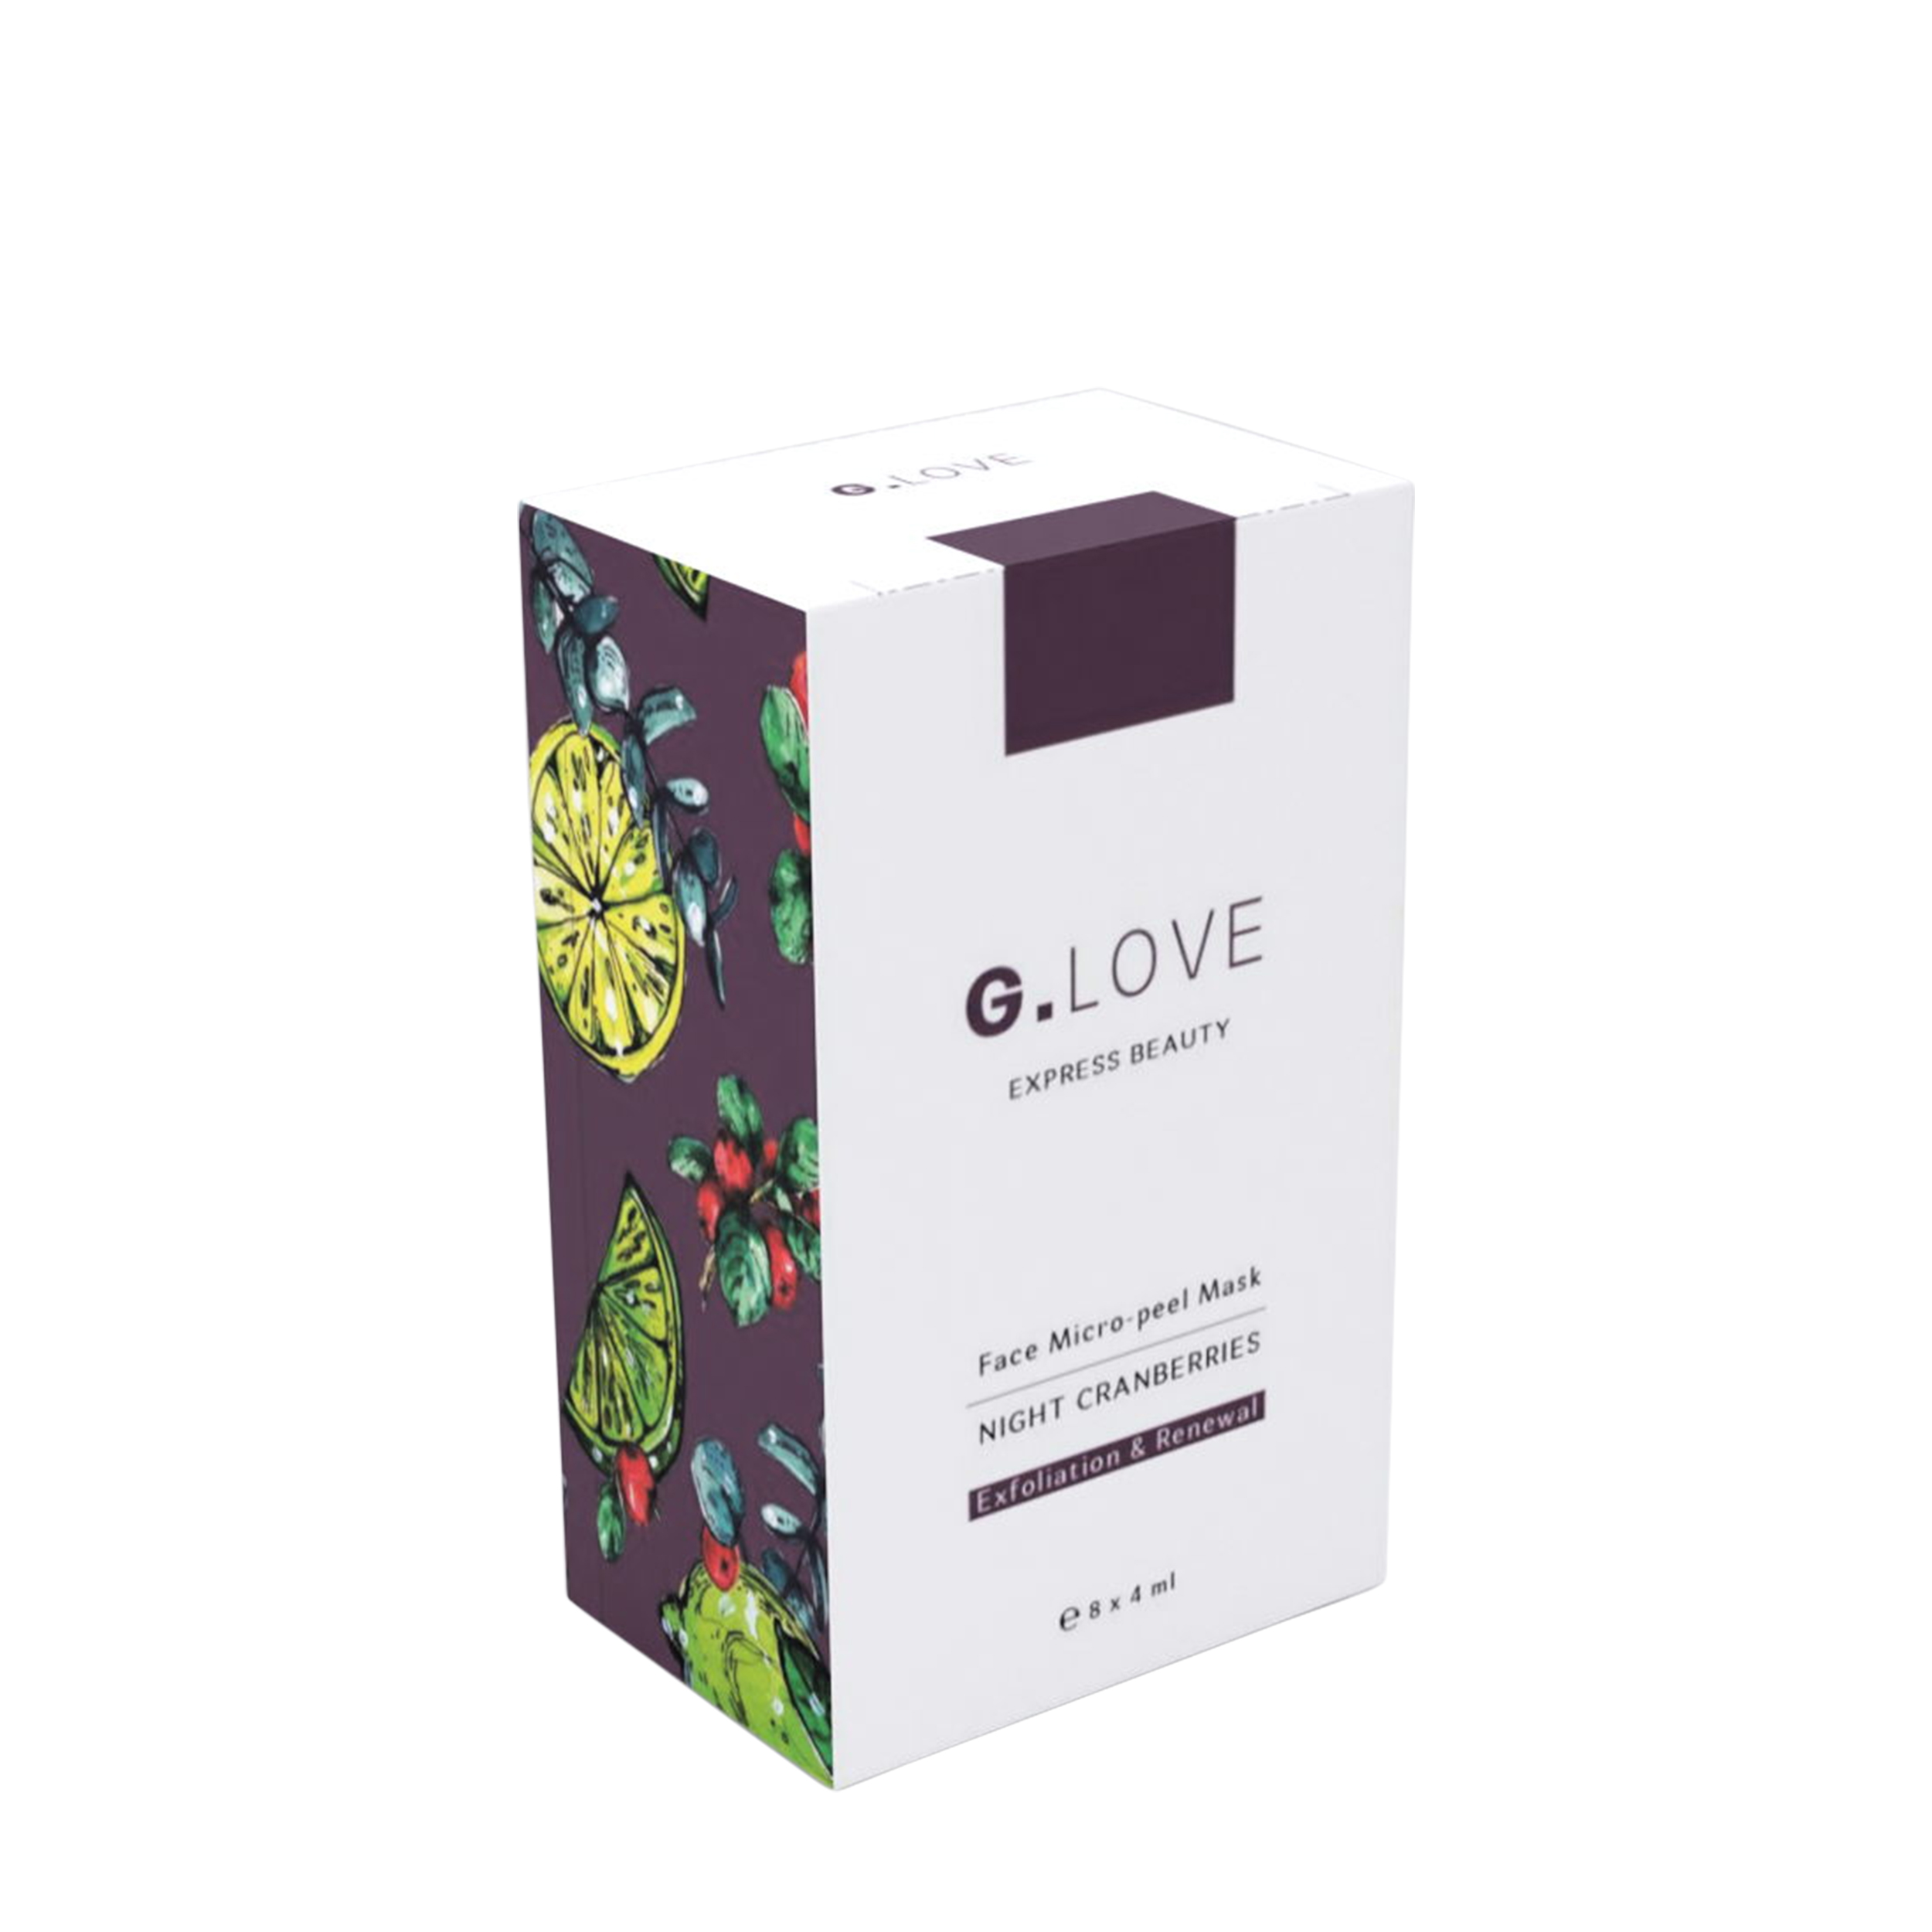 G.LOVE G.LOVE Ночная отшелушивающая маска для лица с кислотами Night Cranberries